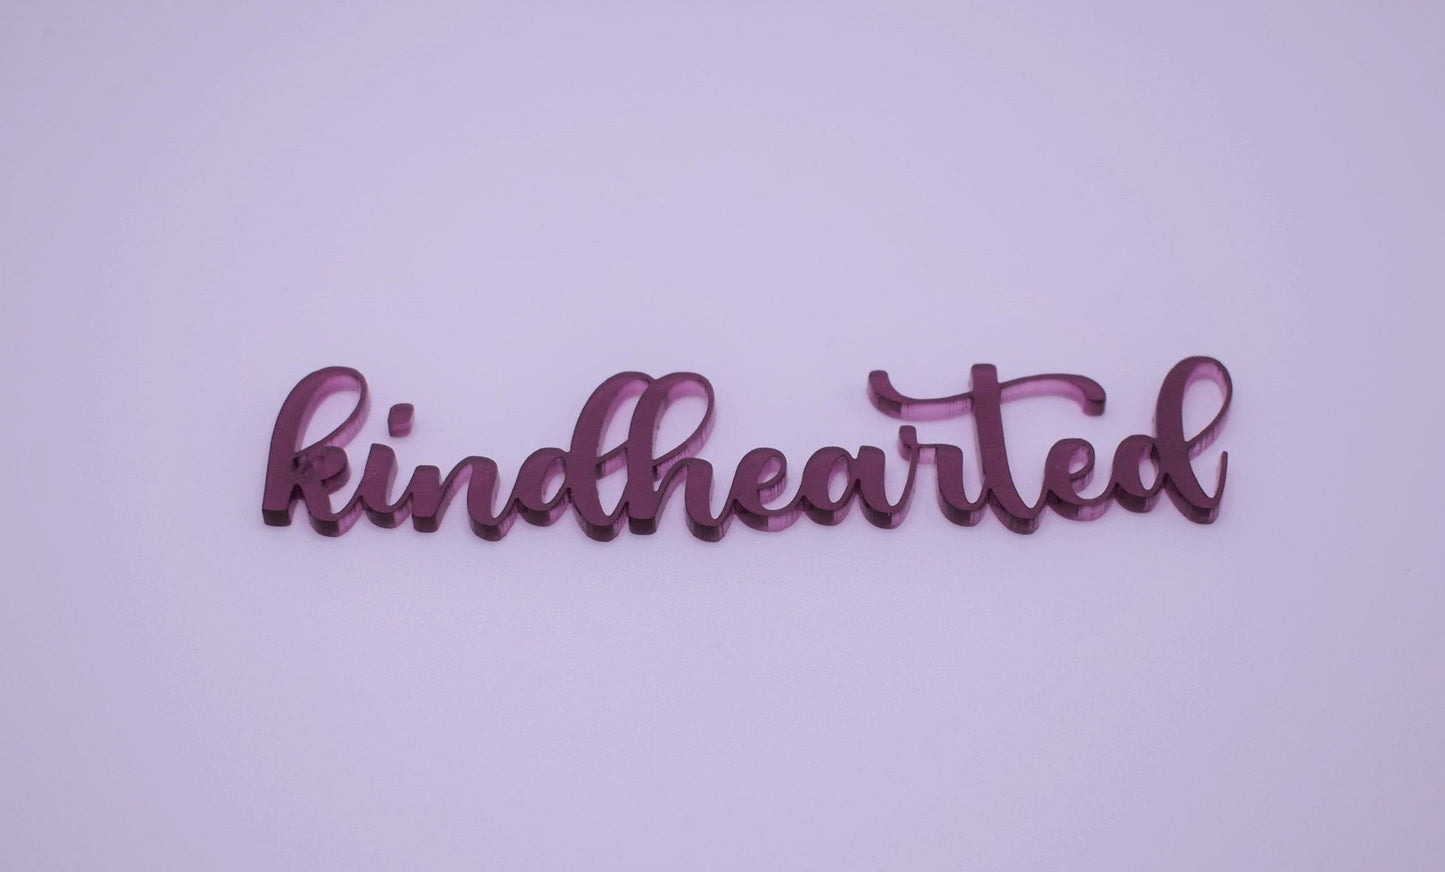 Kindhearted - Creative Designs By Kari